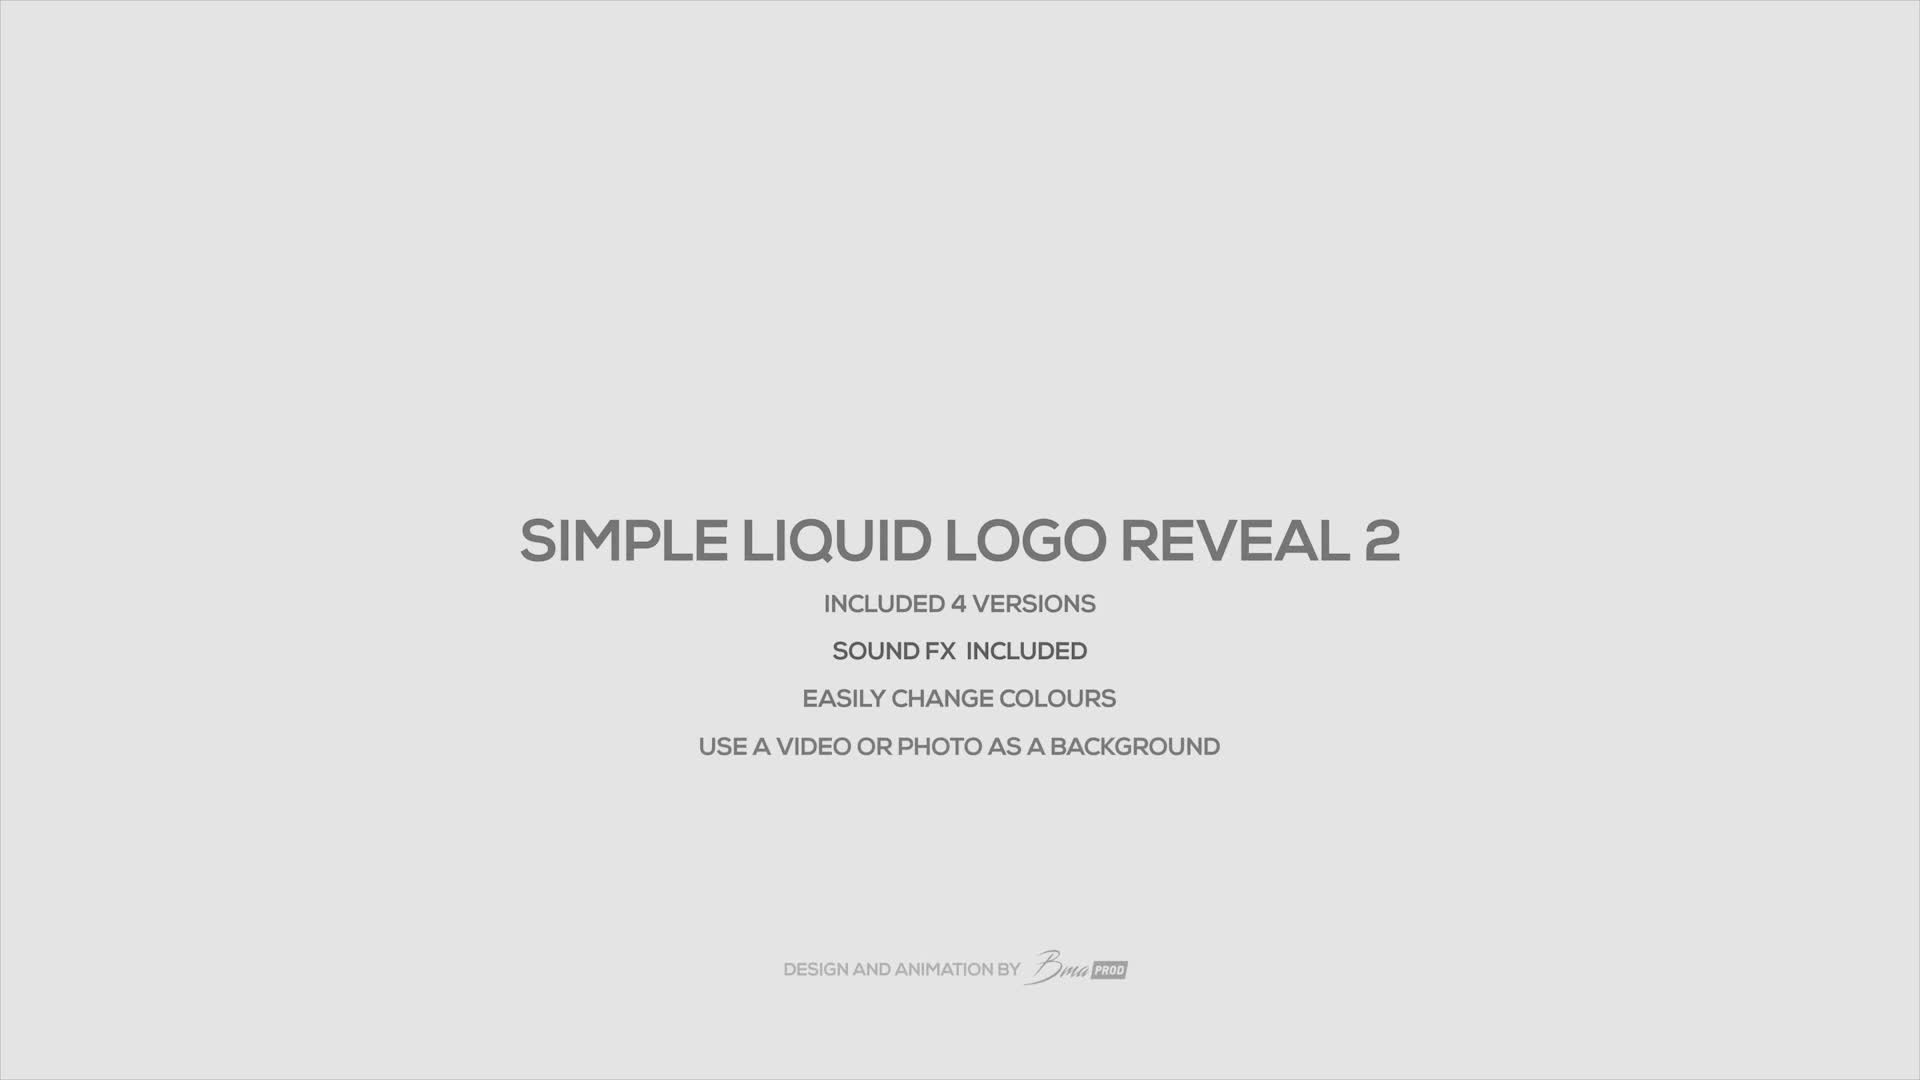 Simple Liquid Logo Reveal 2 For Premiere Pro Videohive 38766967 Premiere Pro Image 1